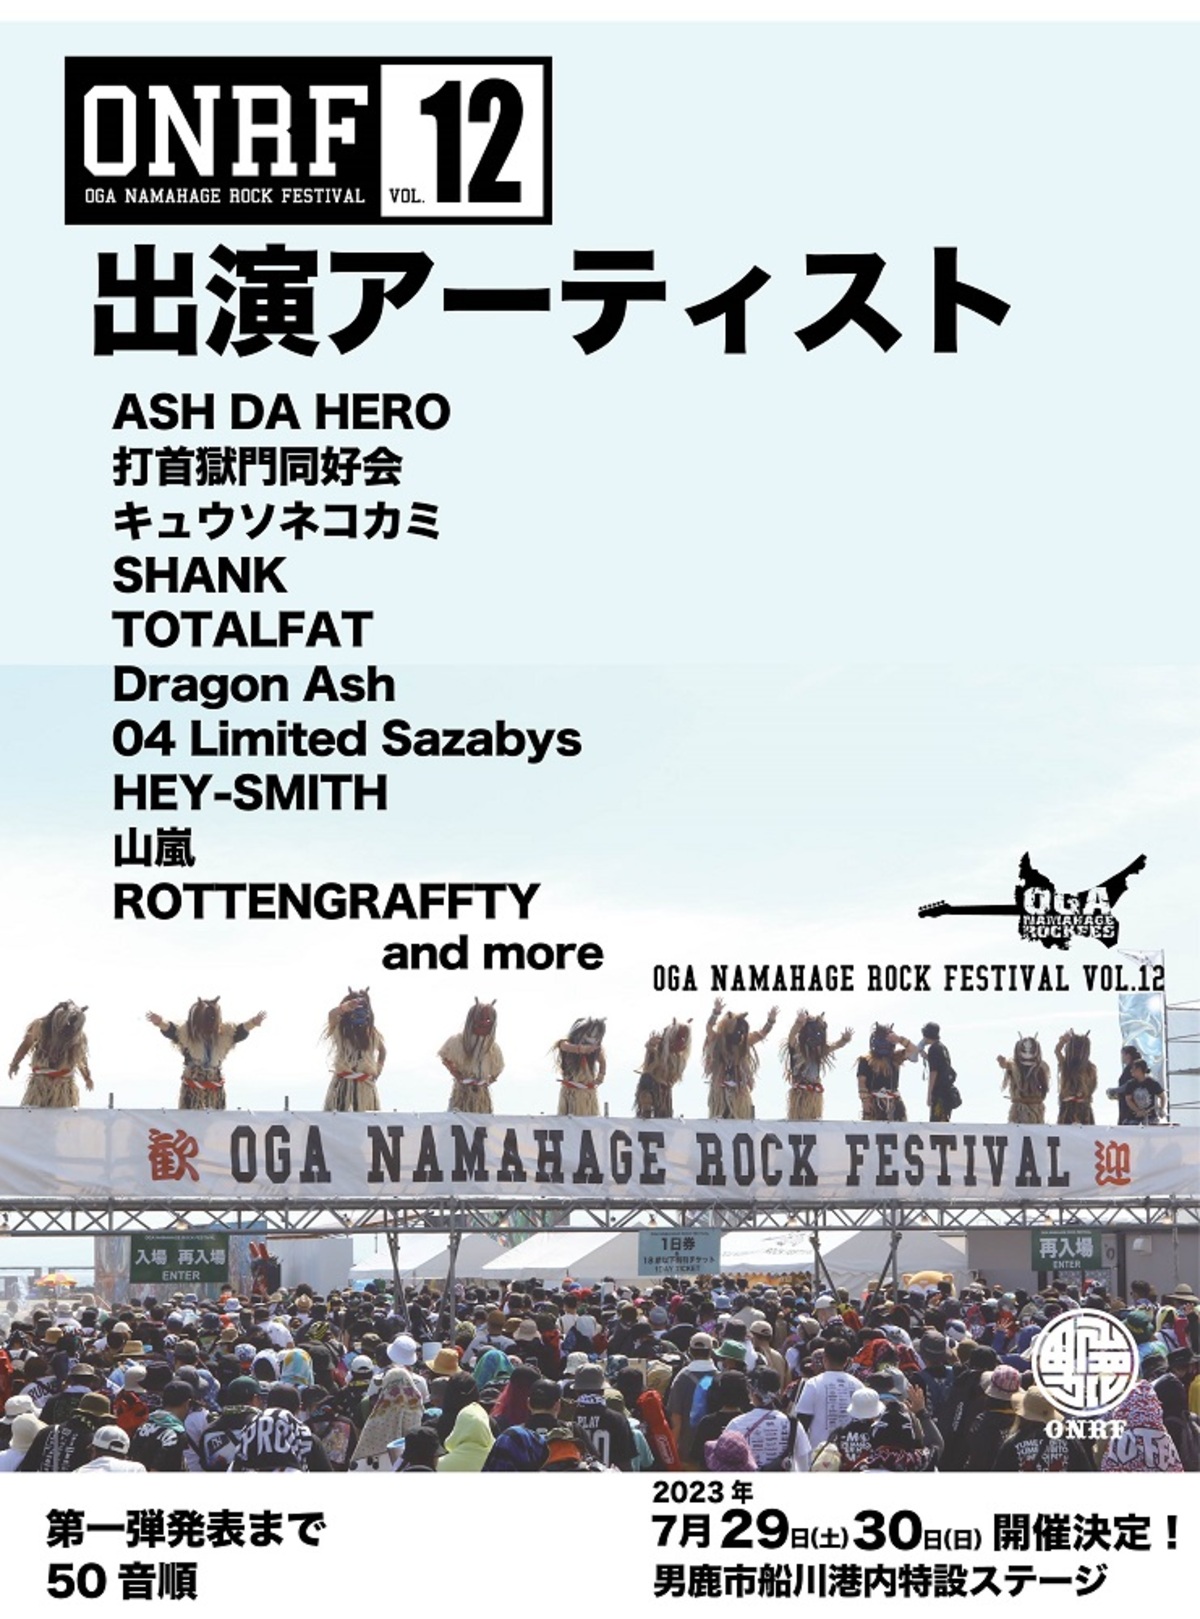 7/30 OGA NAMAHAGE ROCK FESTIVAL(男鹿フェス) | hartwellspremium.com